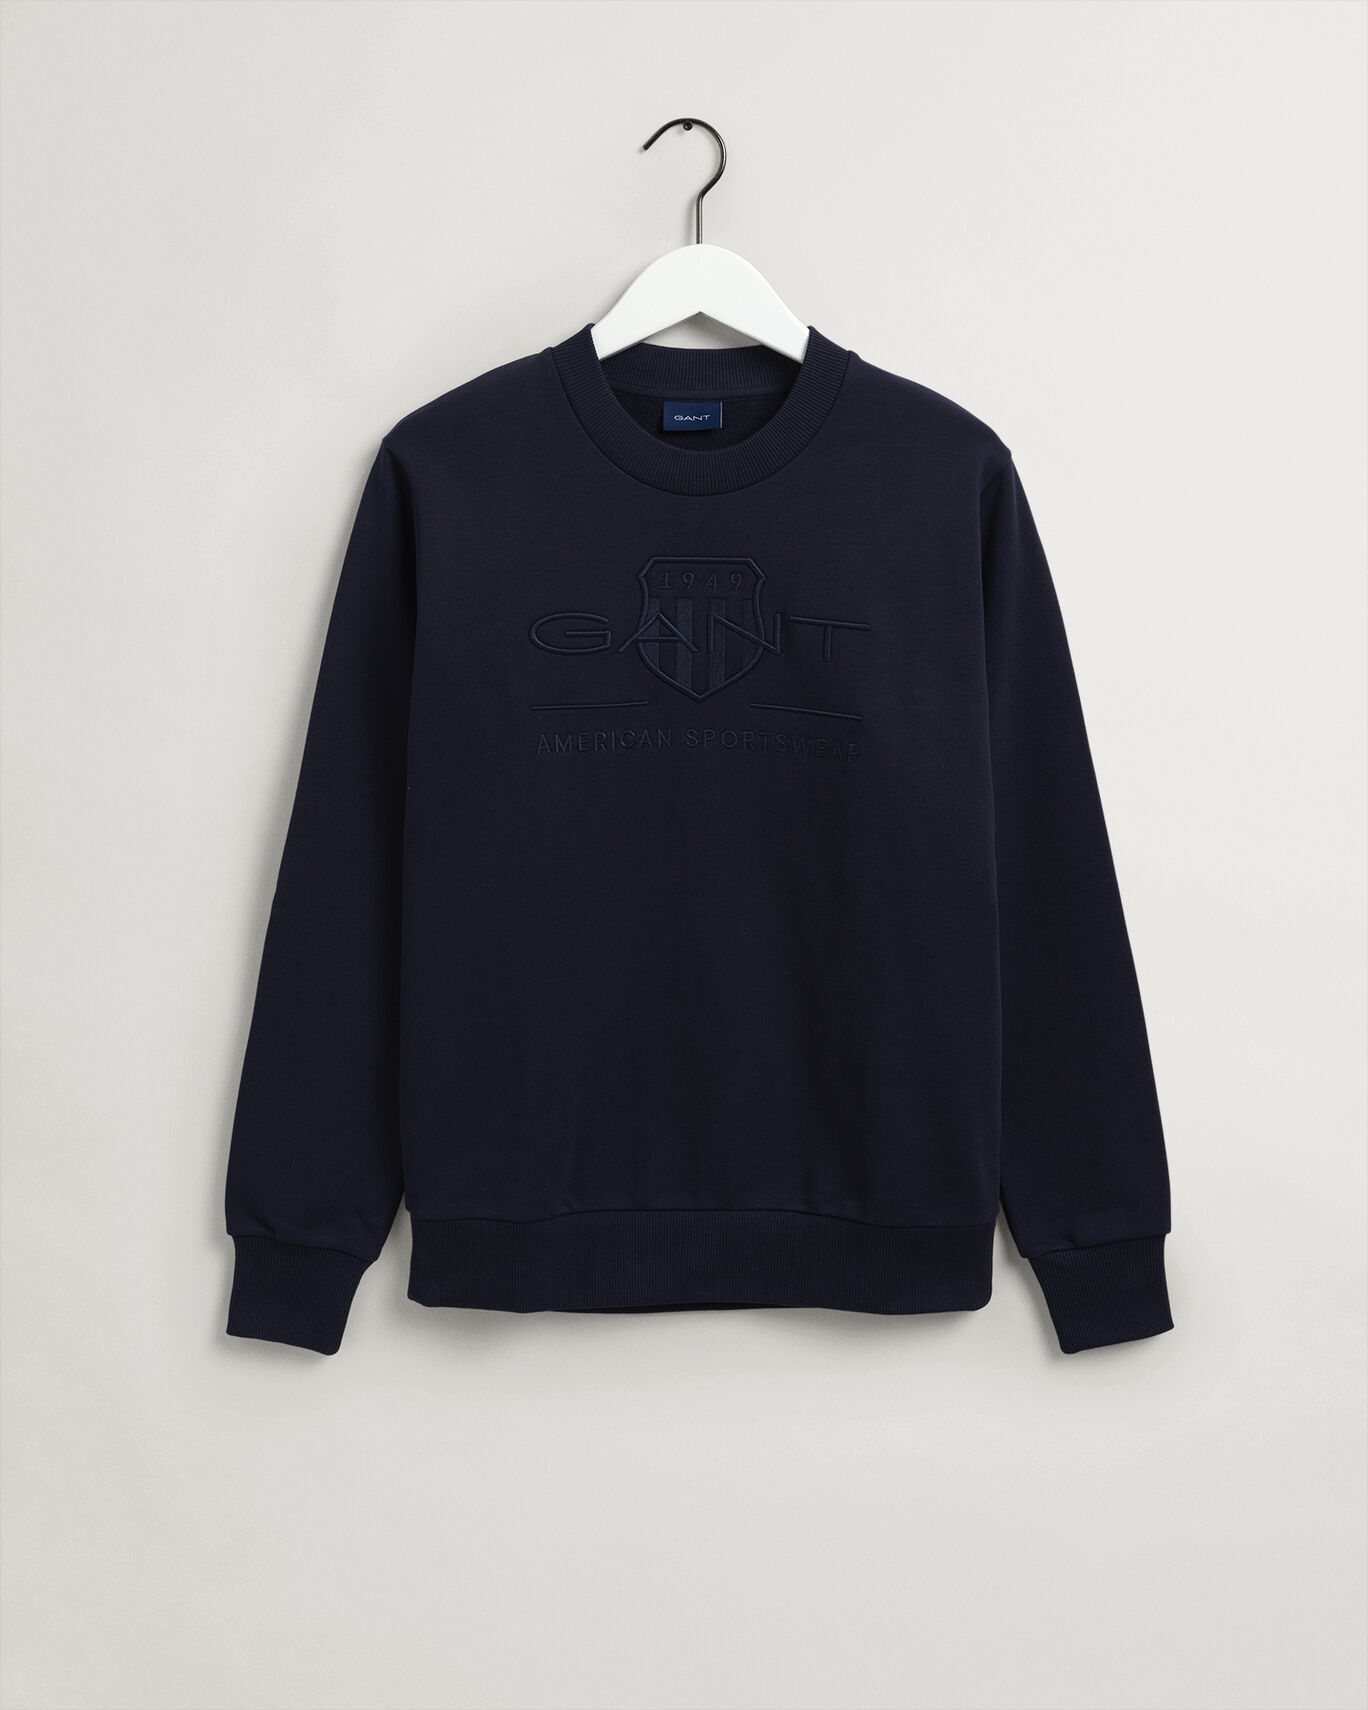 Gant Tonal Archive Shield C-Neck Sweatshirt - Navy - Corcoran's Menswear